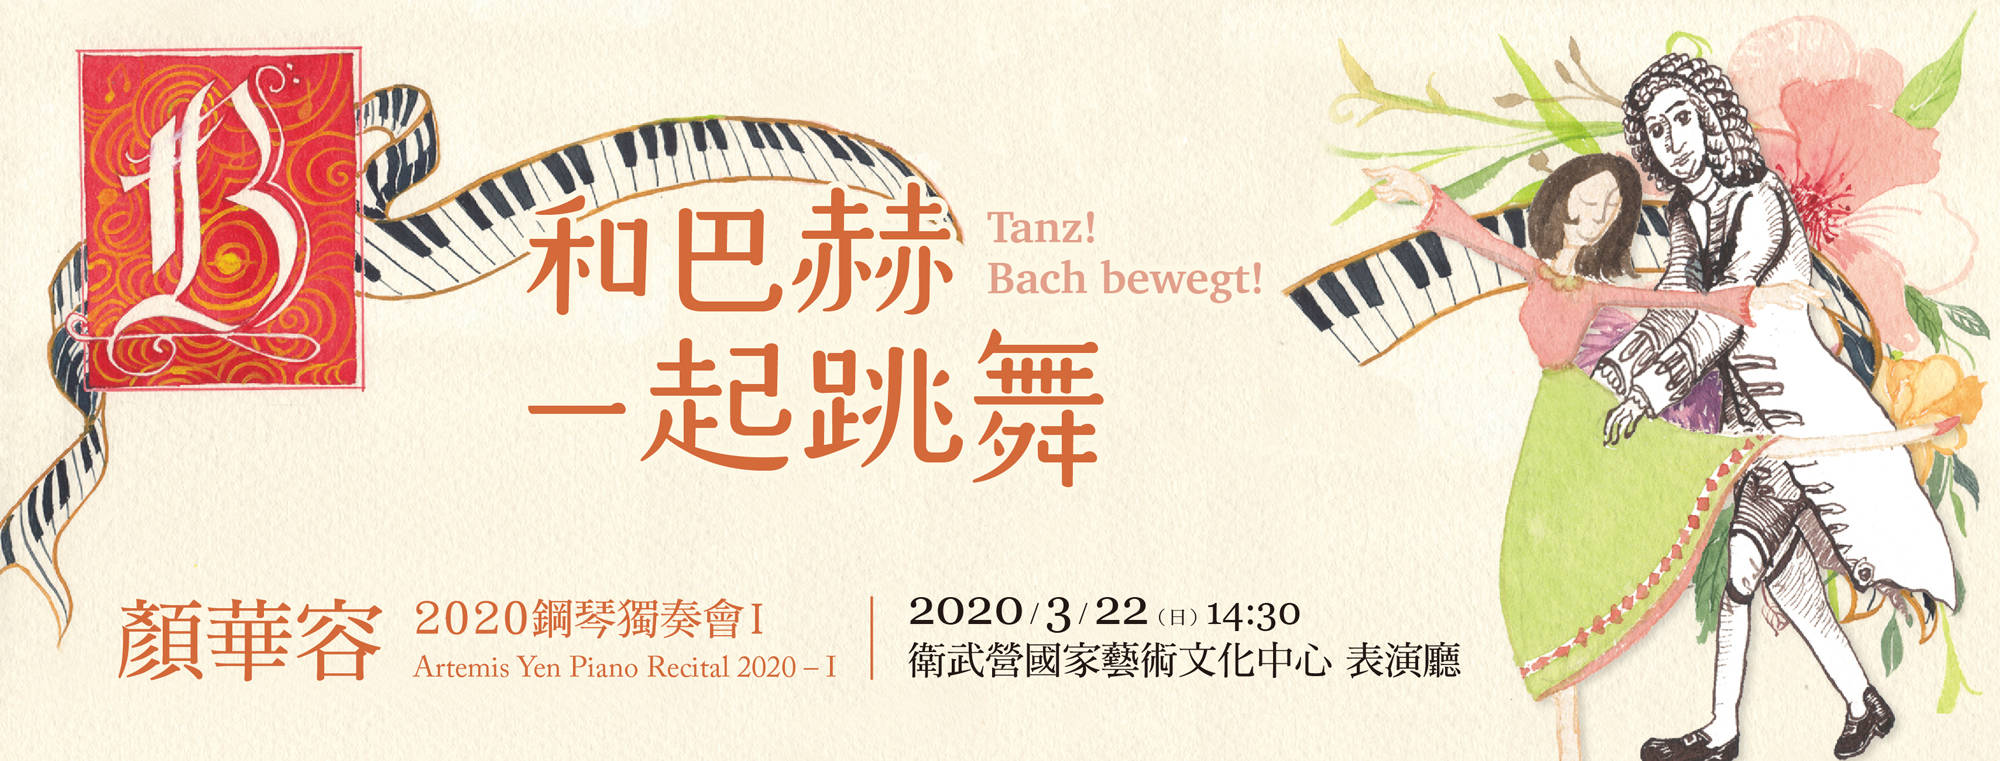 Artemis Yen Piano Recital 2020–I Tanz! Bach bewegt!